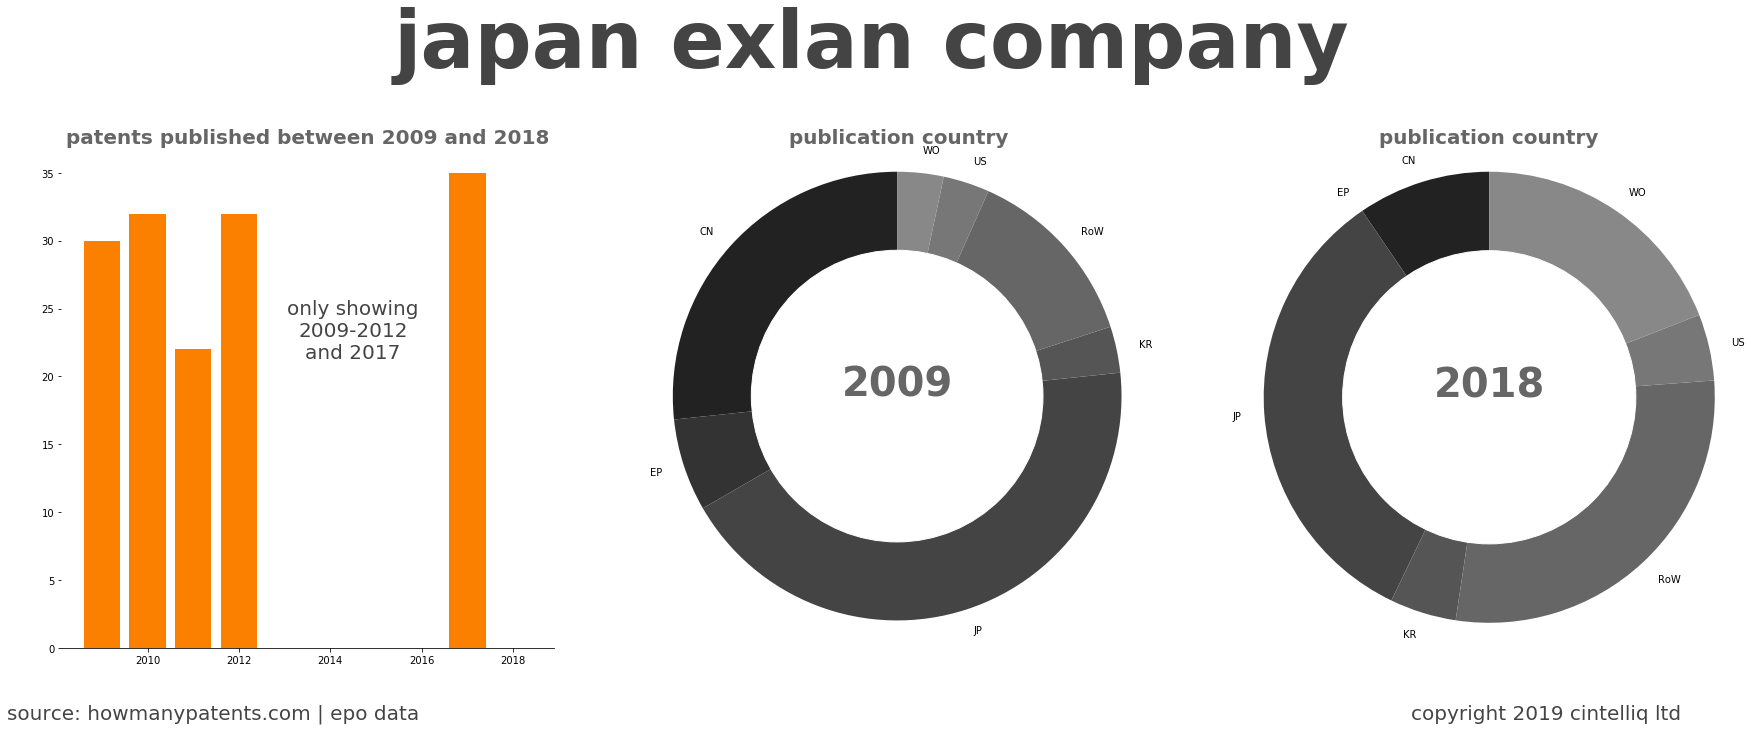 summary of patents for Japan Exlan Company